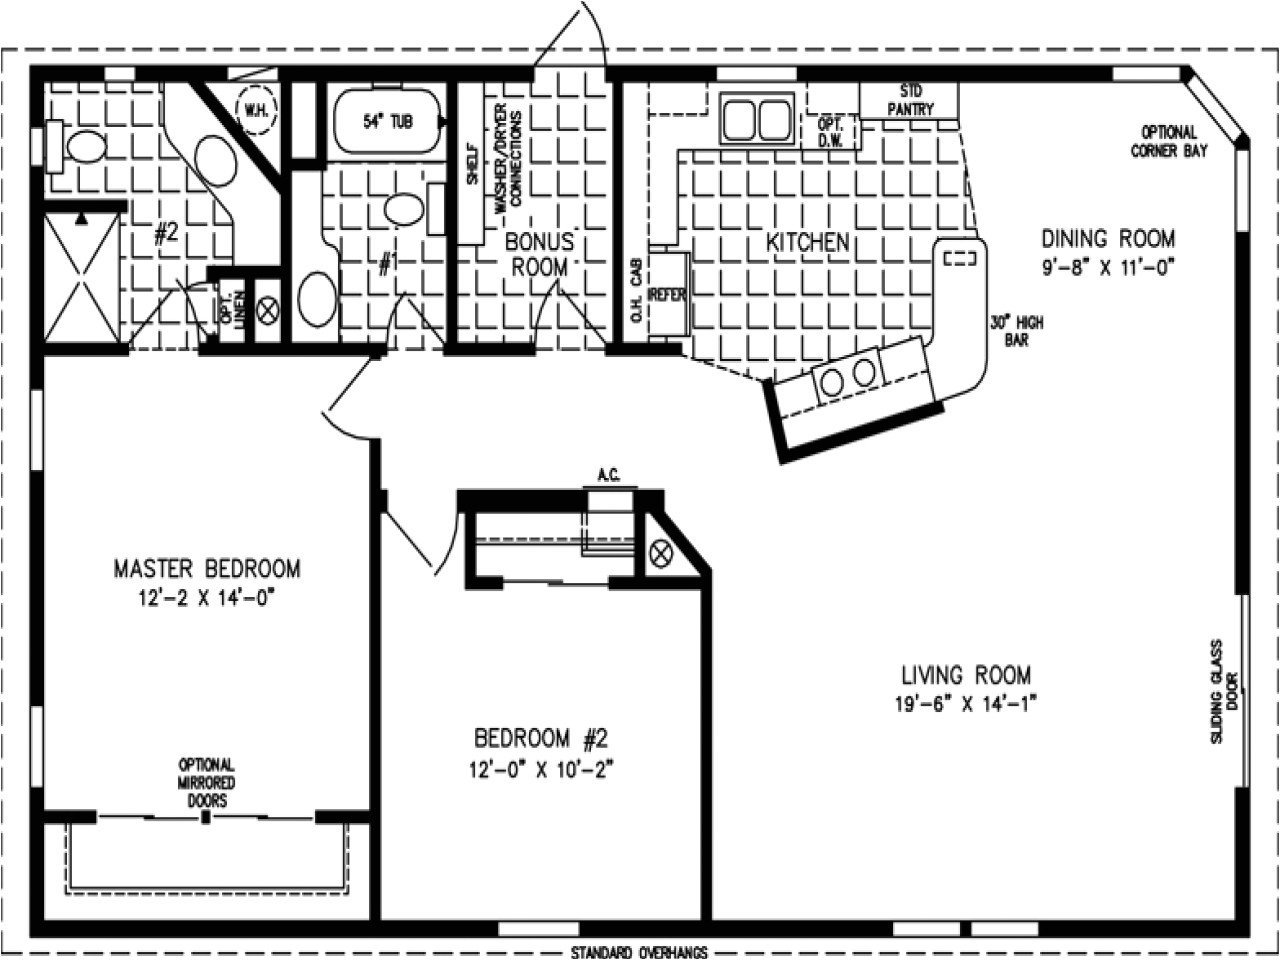 a floor plan for a house